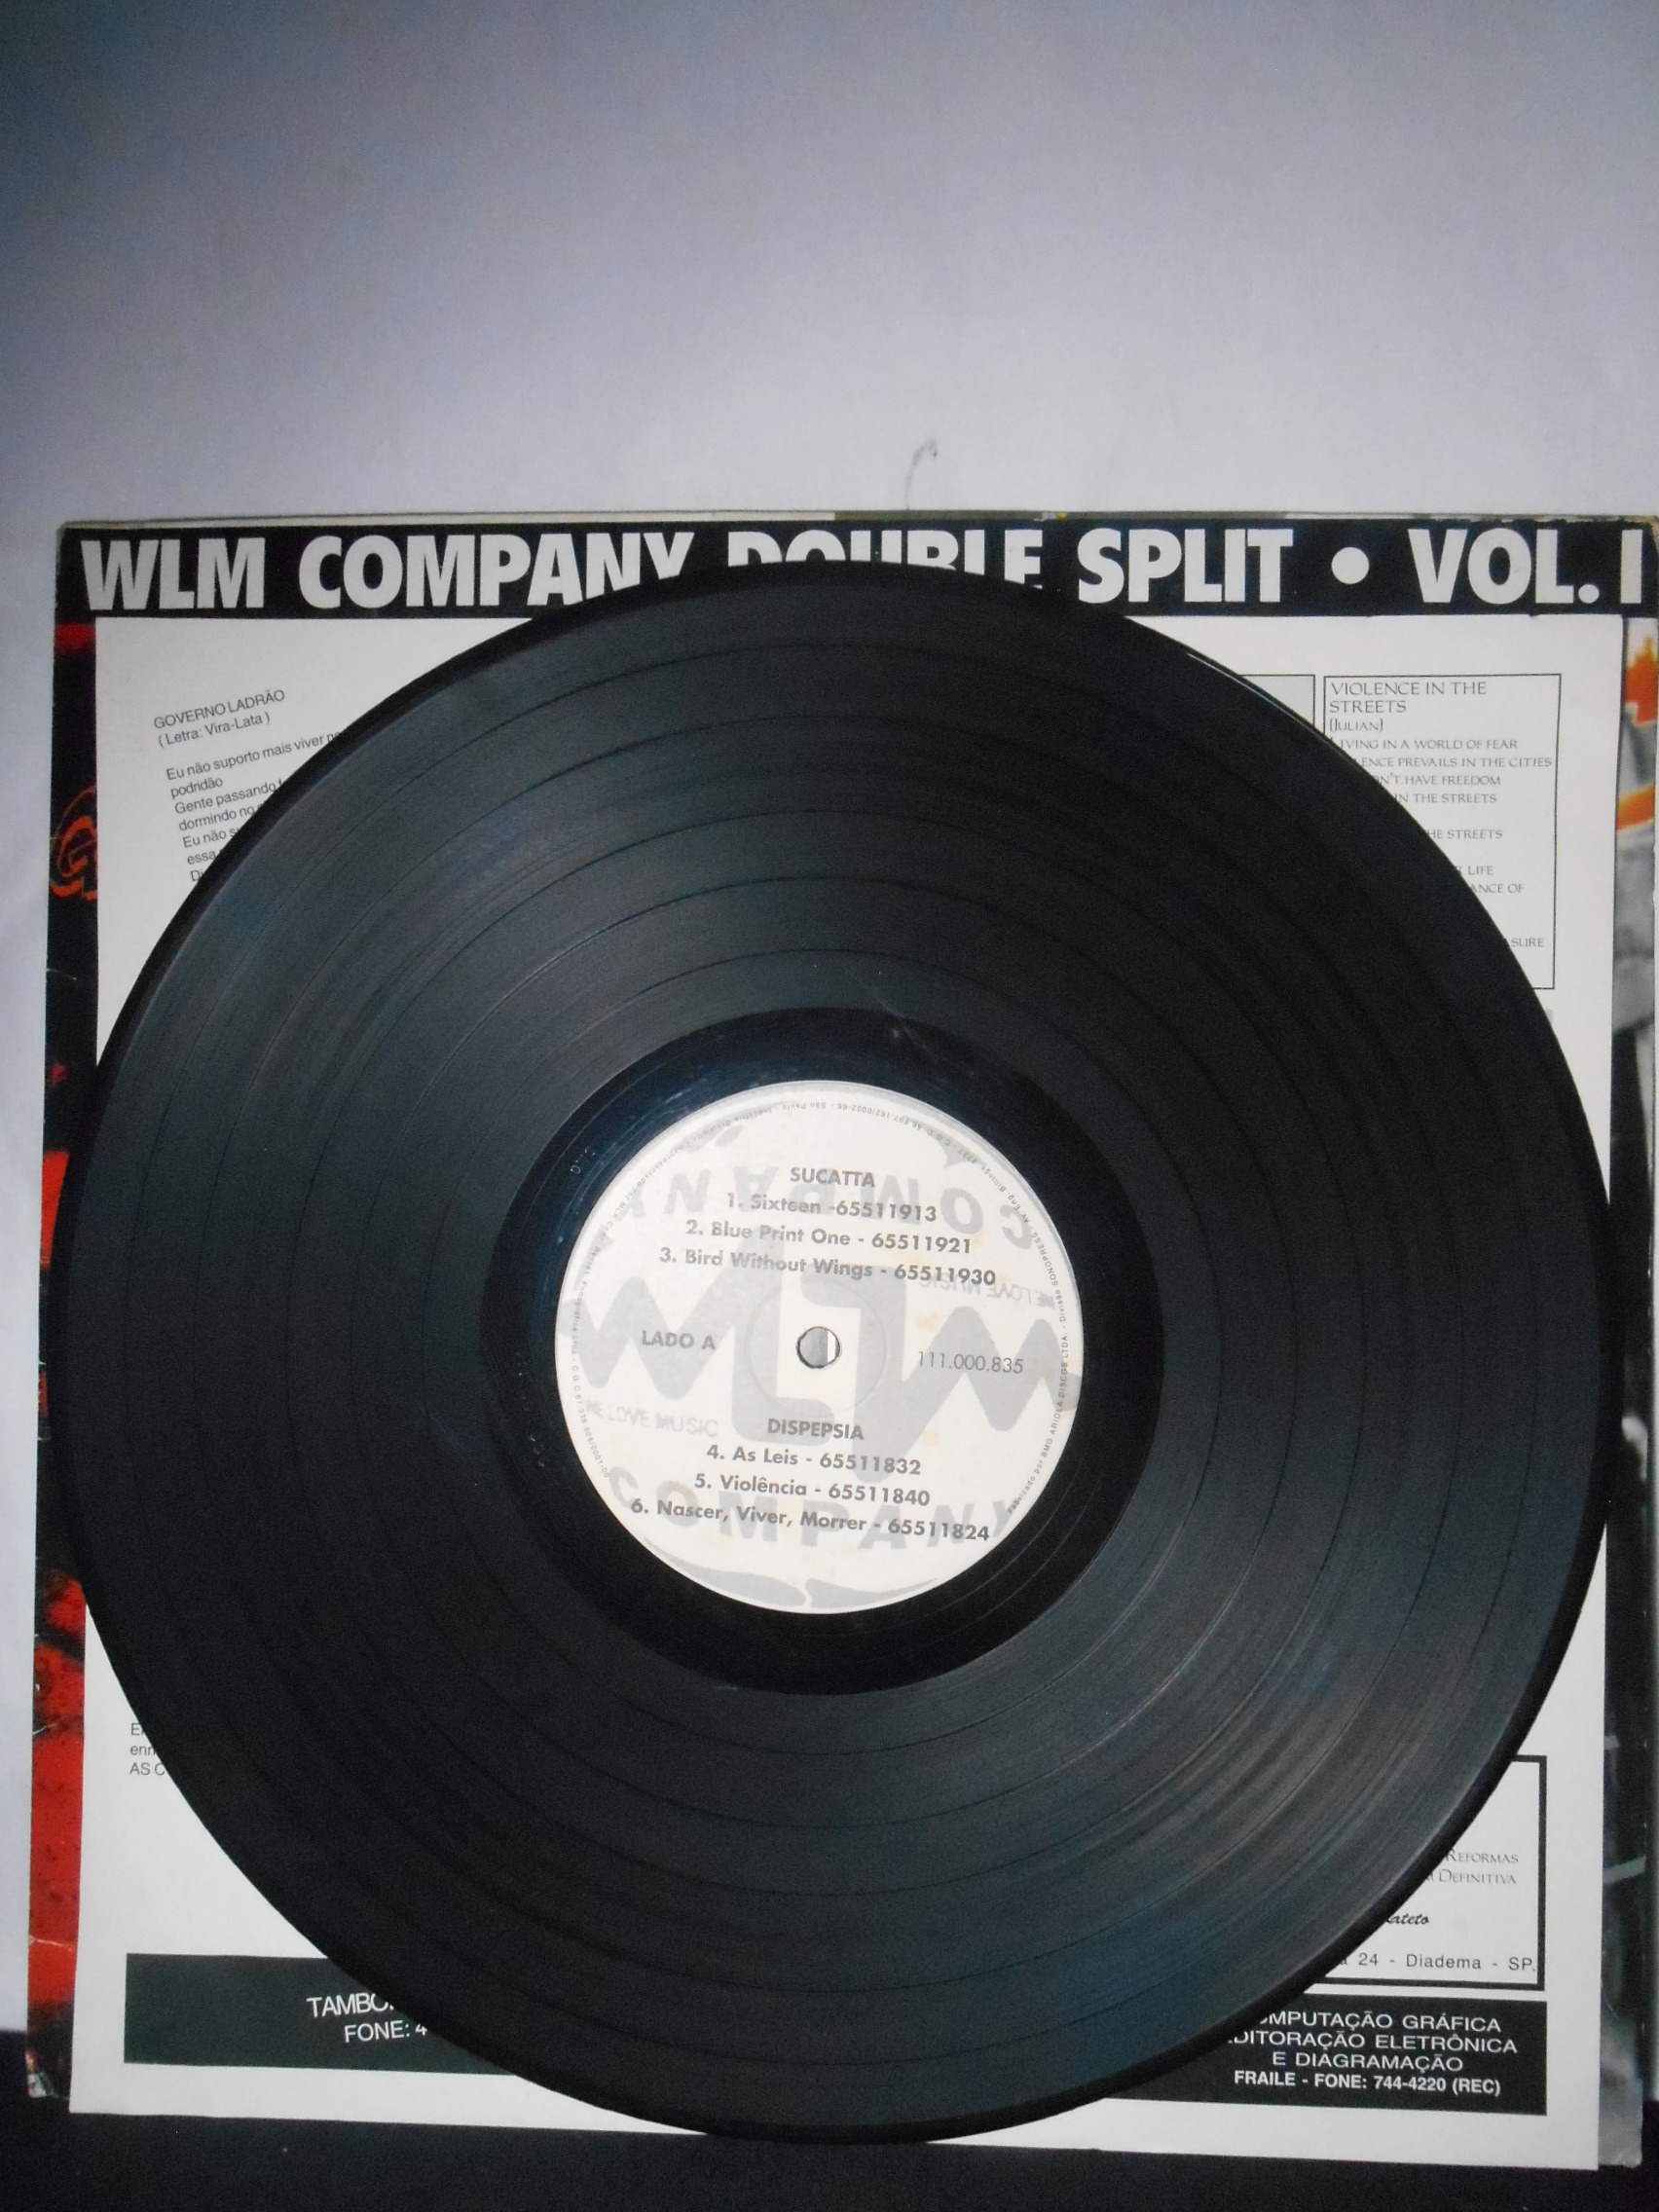 Vinil - Wlm Company Double Split - Vol 1